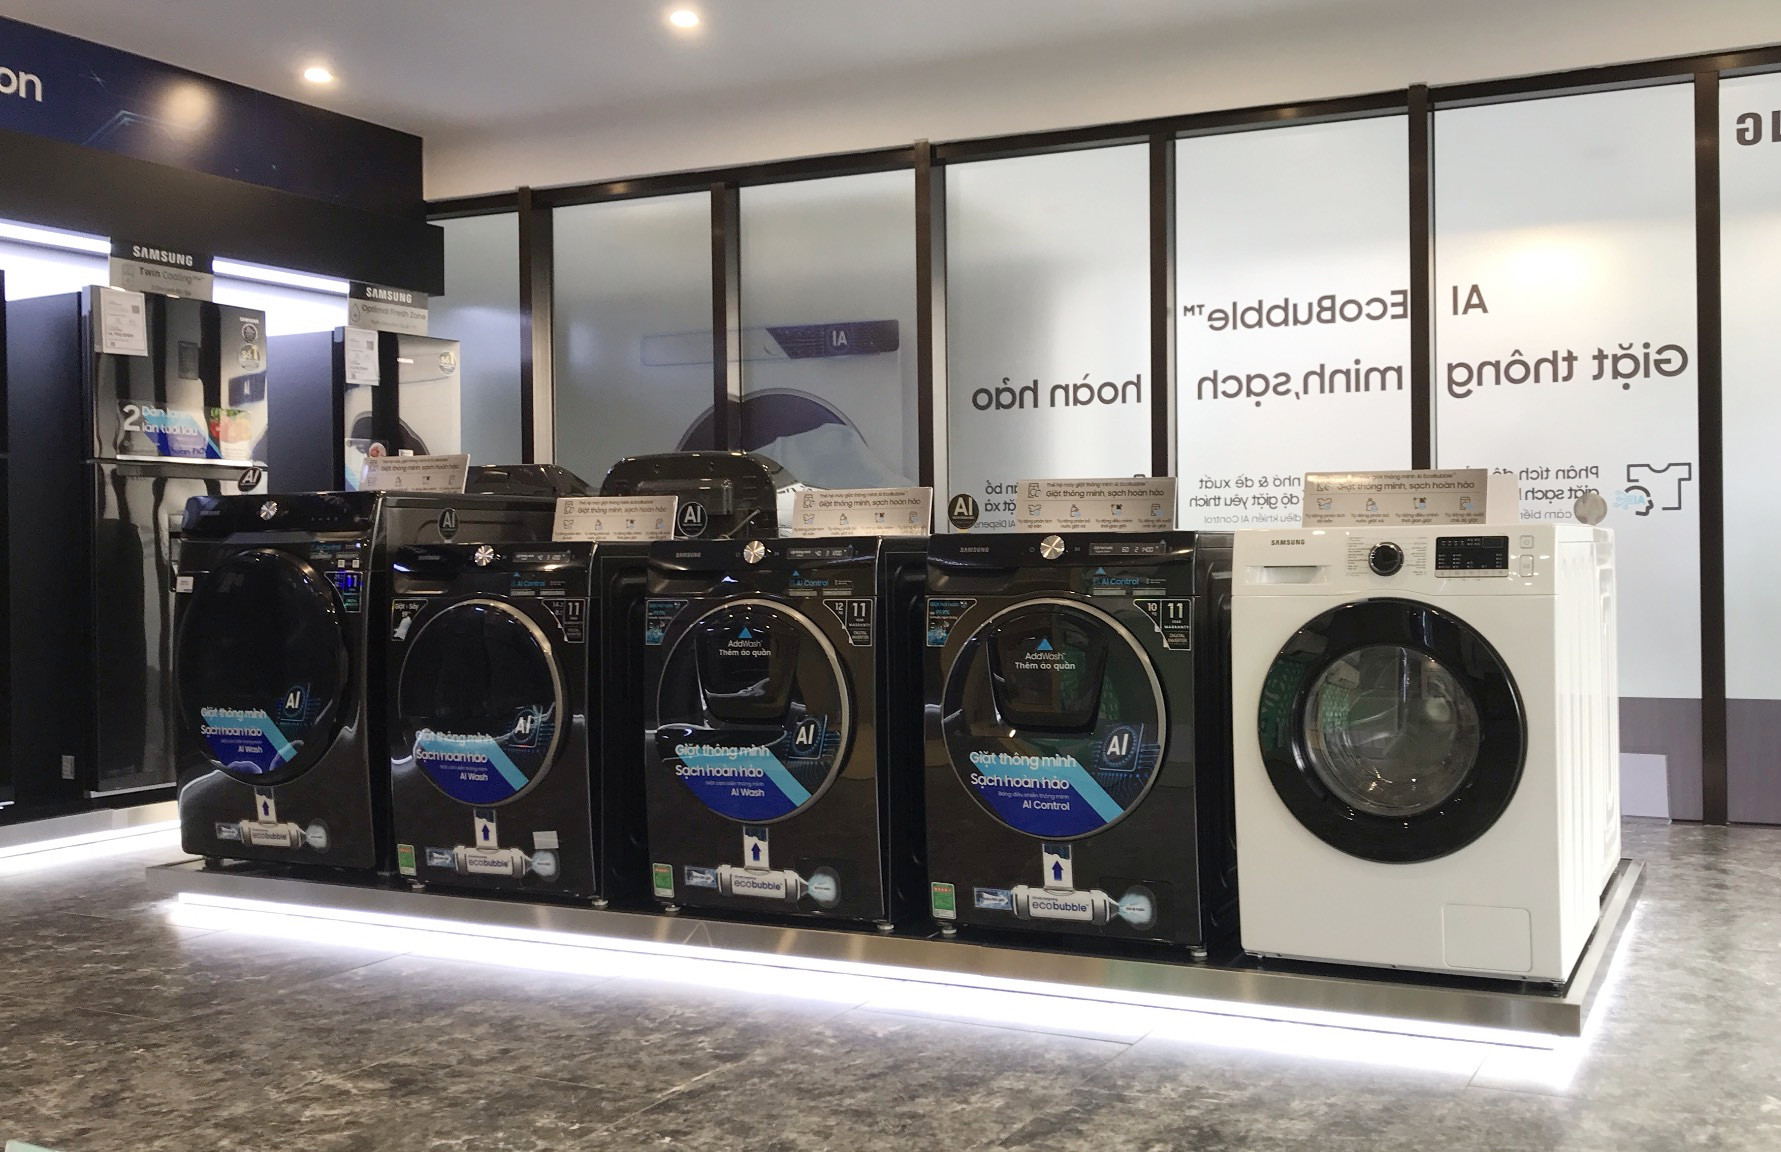 Máy giặt Samsung được trưng bày tại Samsung Midtown.